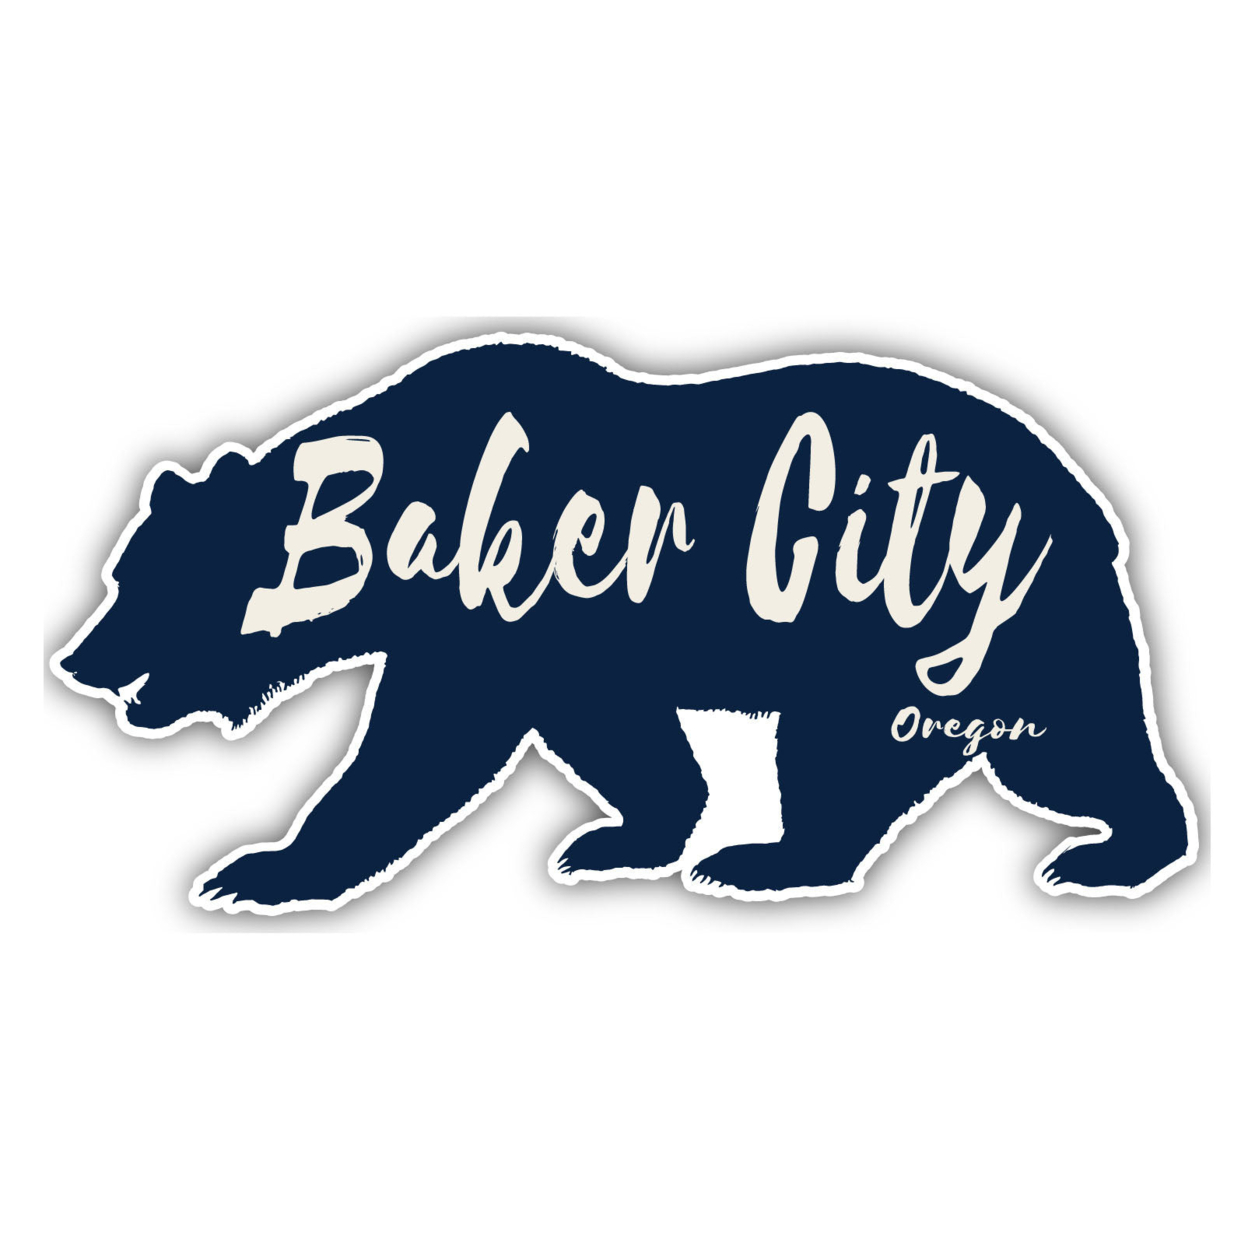 Baker City Oregon Souvenir Decorative Stickers (Choose Theme And Size) - 4-Pack, 10-Inch, Tent